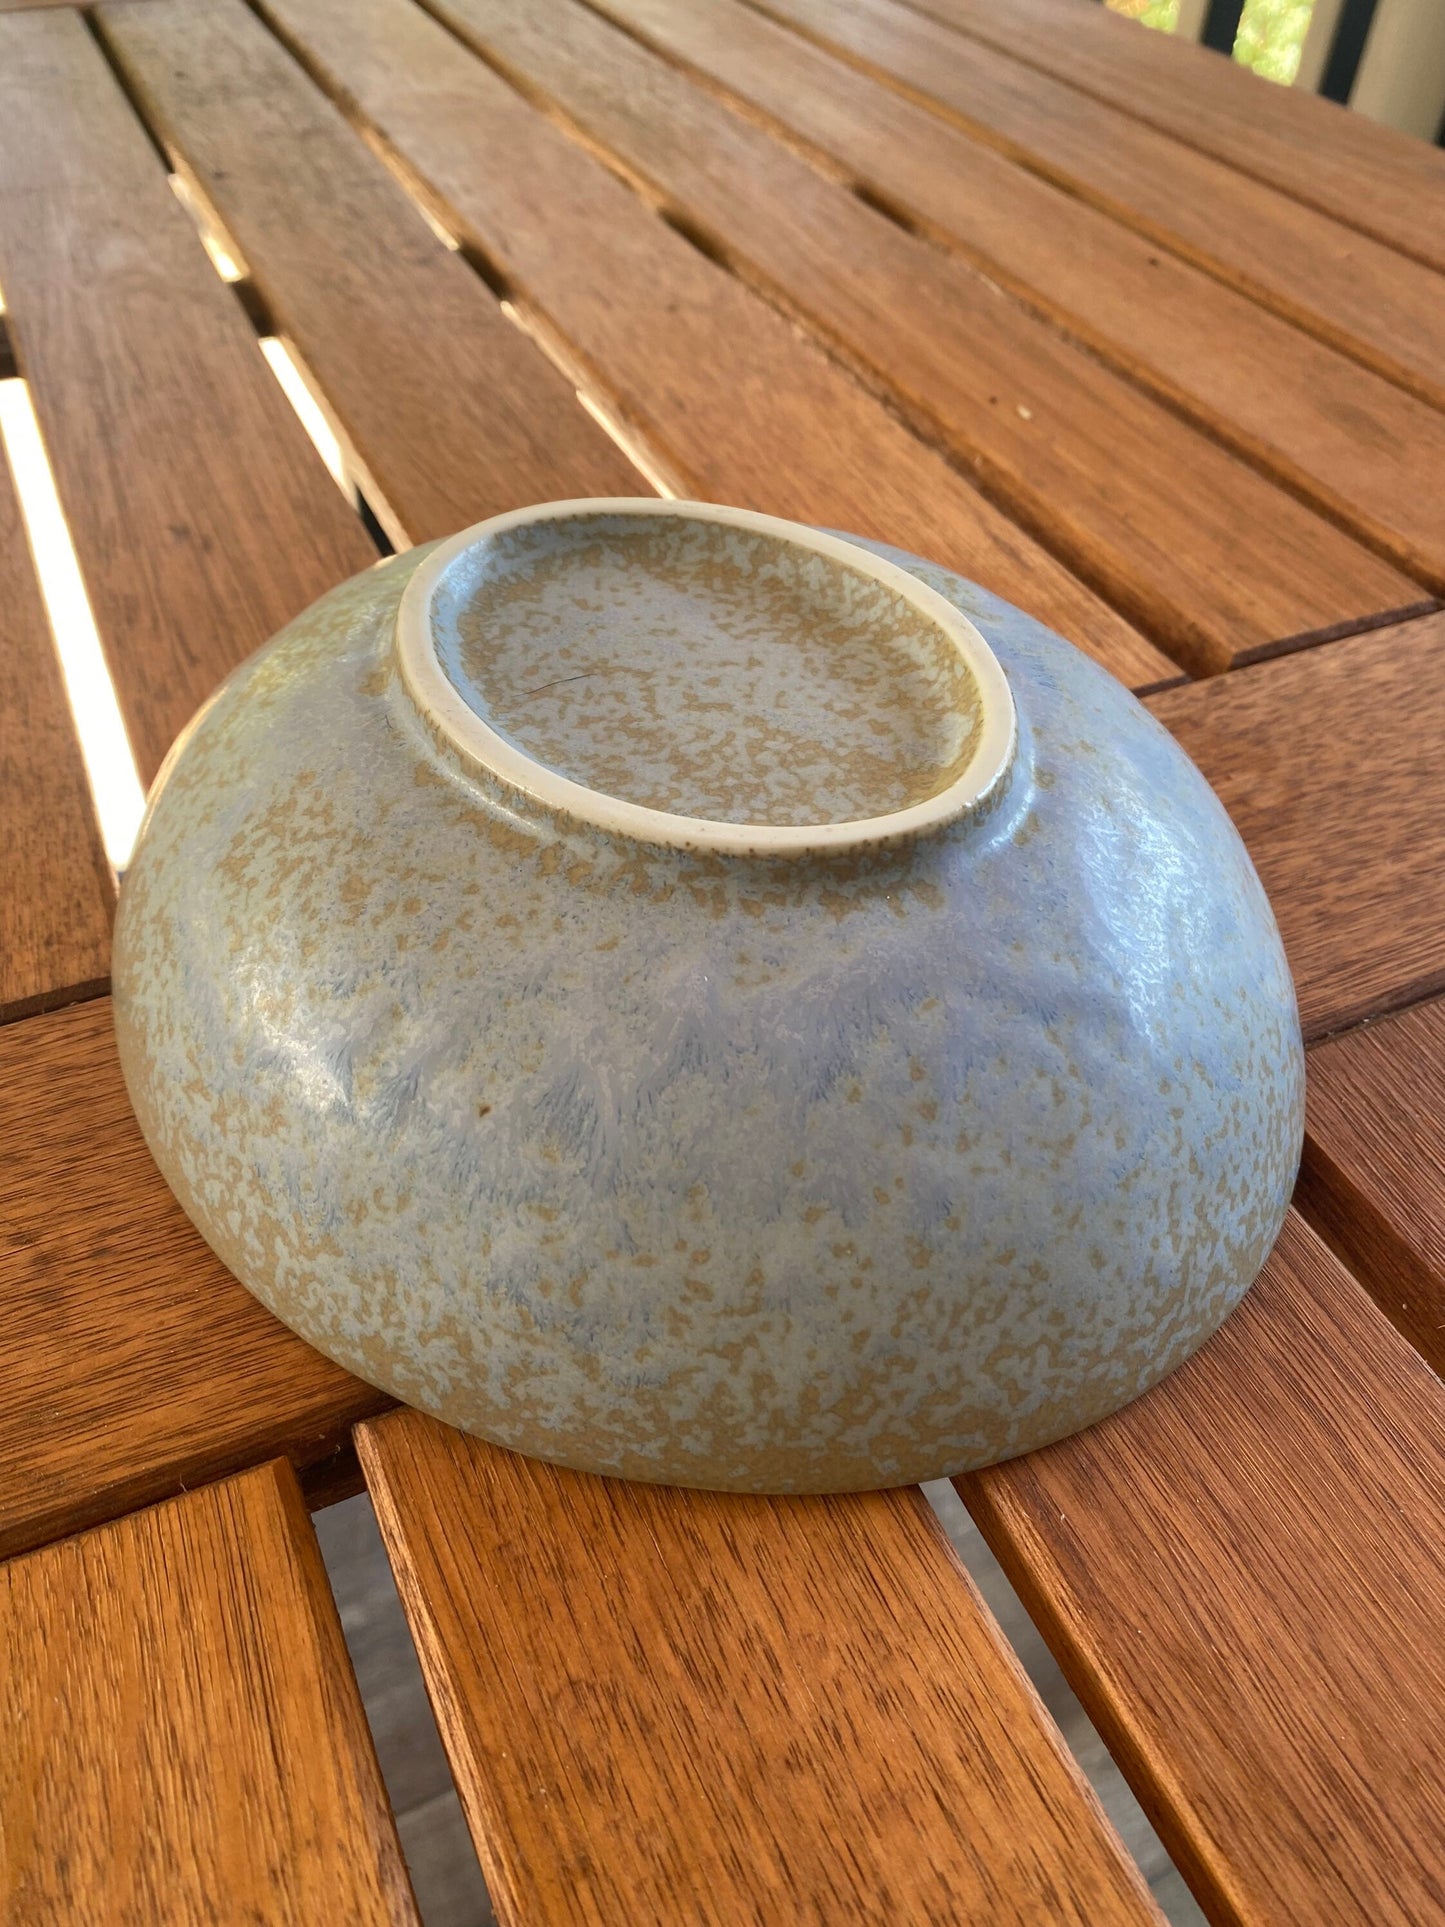 Oval ceramic wafu-Japanese style medium saucer, 8" x 7” x 2" deep